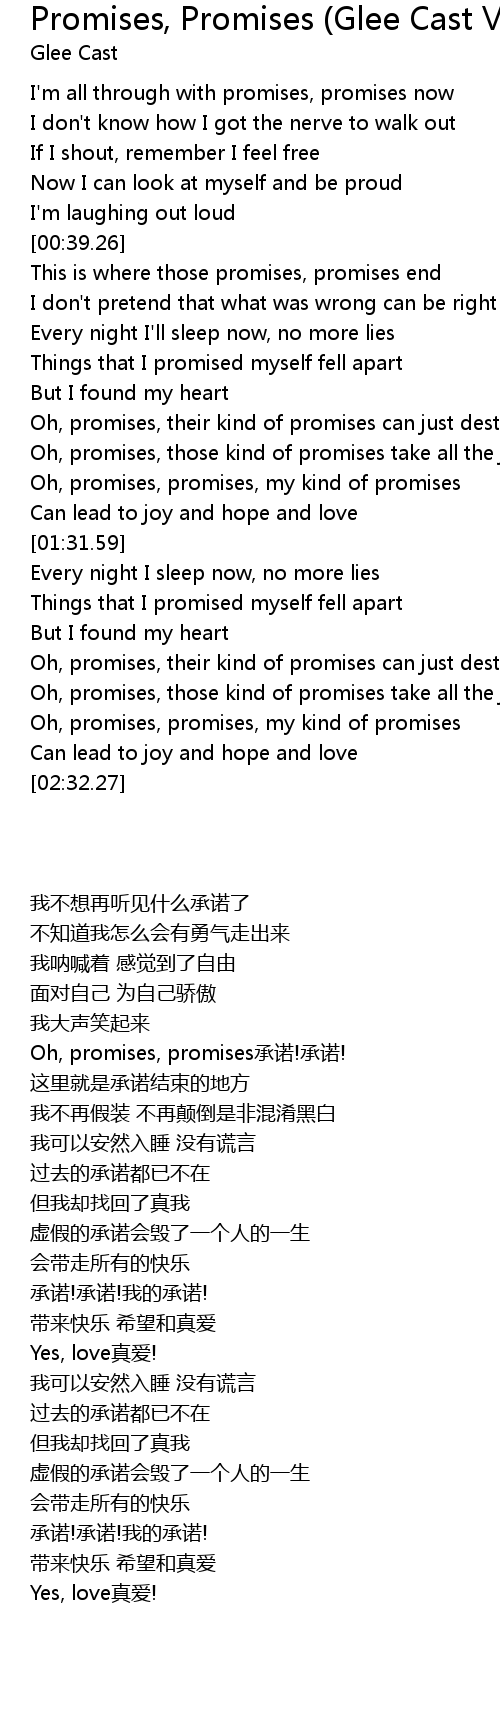 Promises Promises Glee Cast Version Lyrics Follow Lyrics